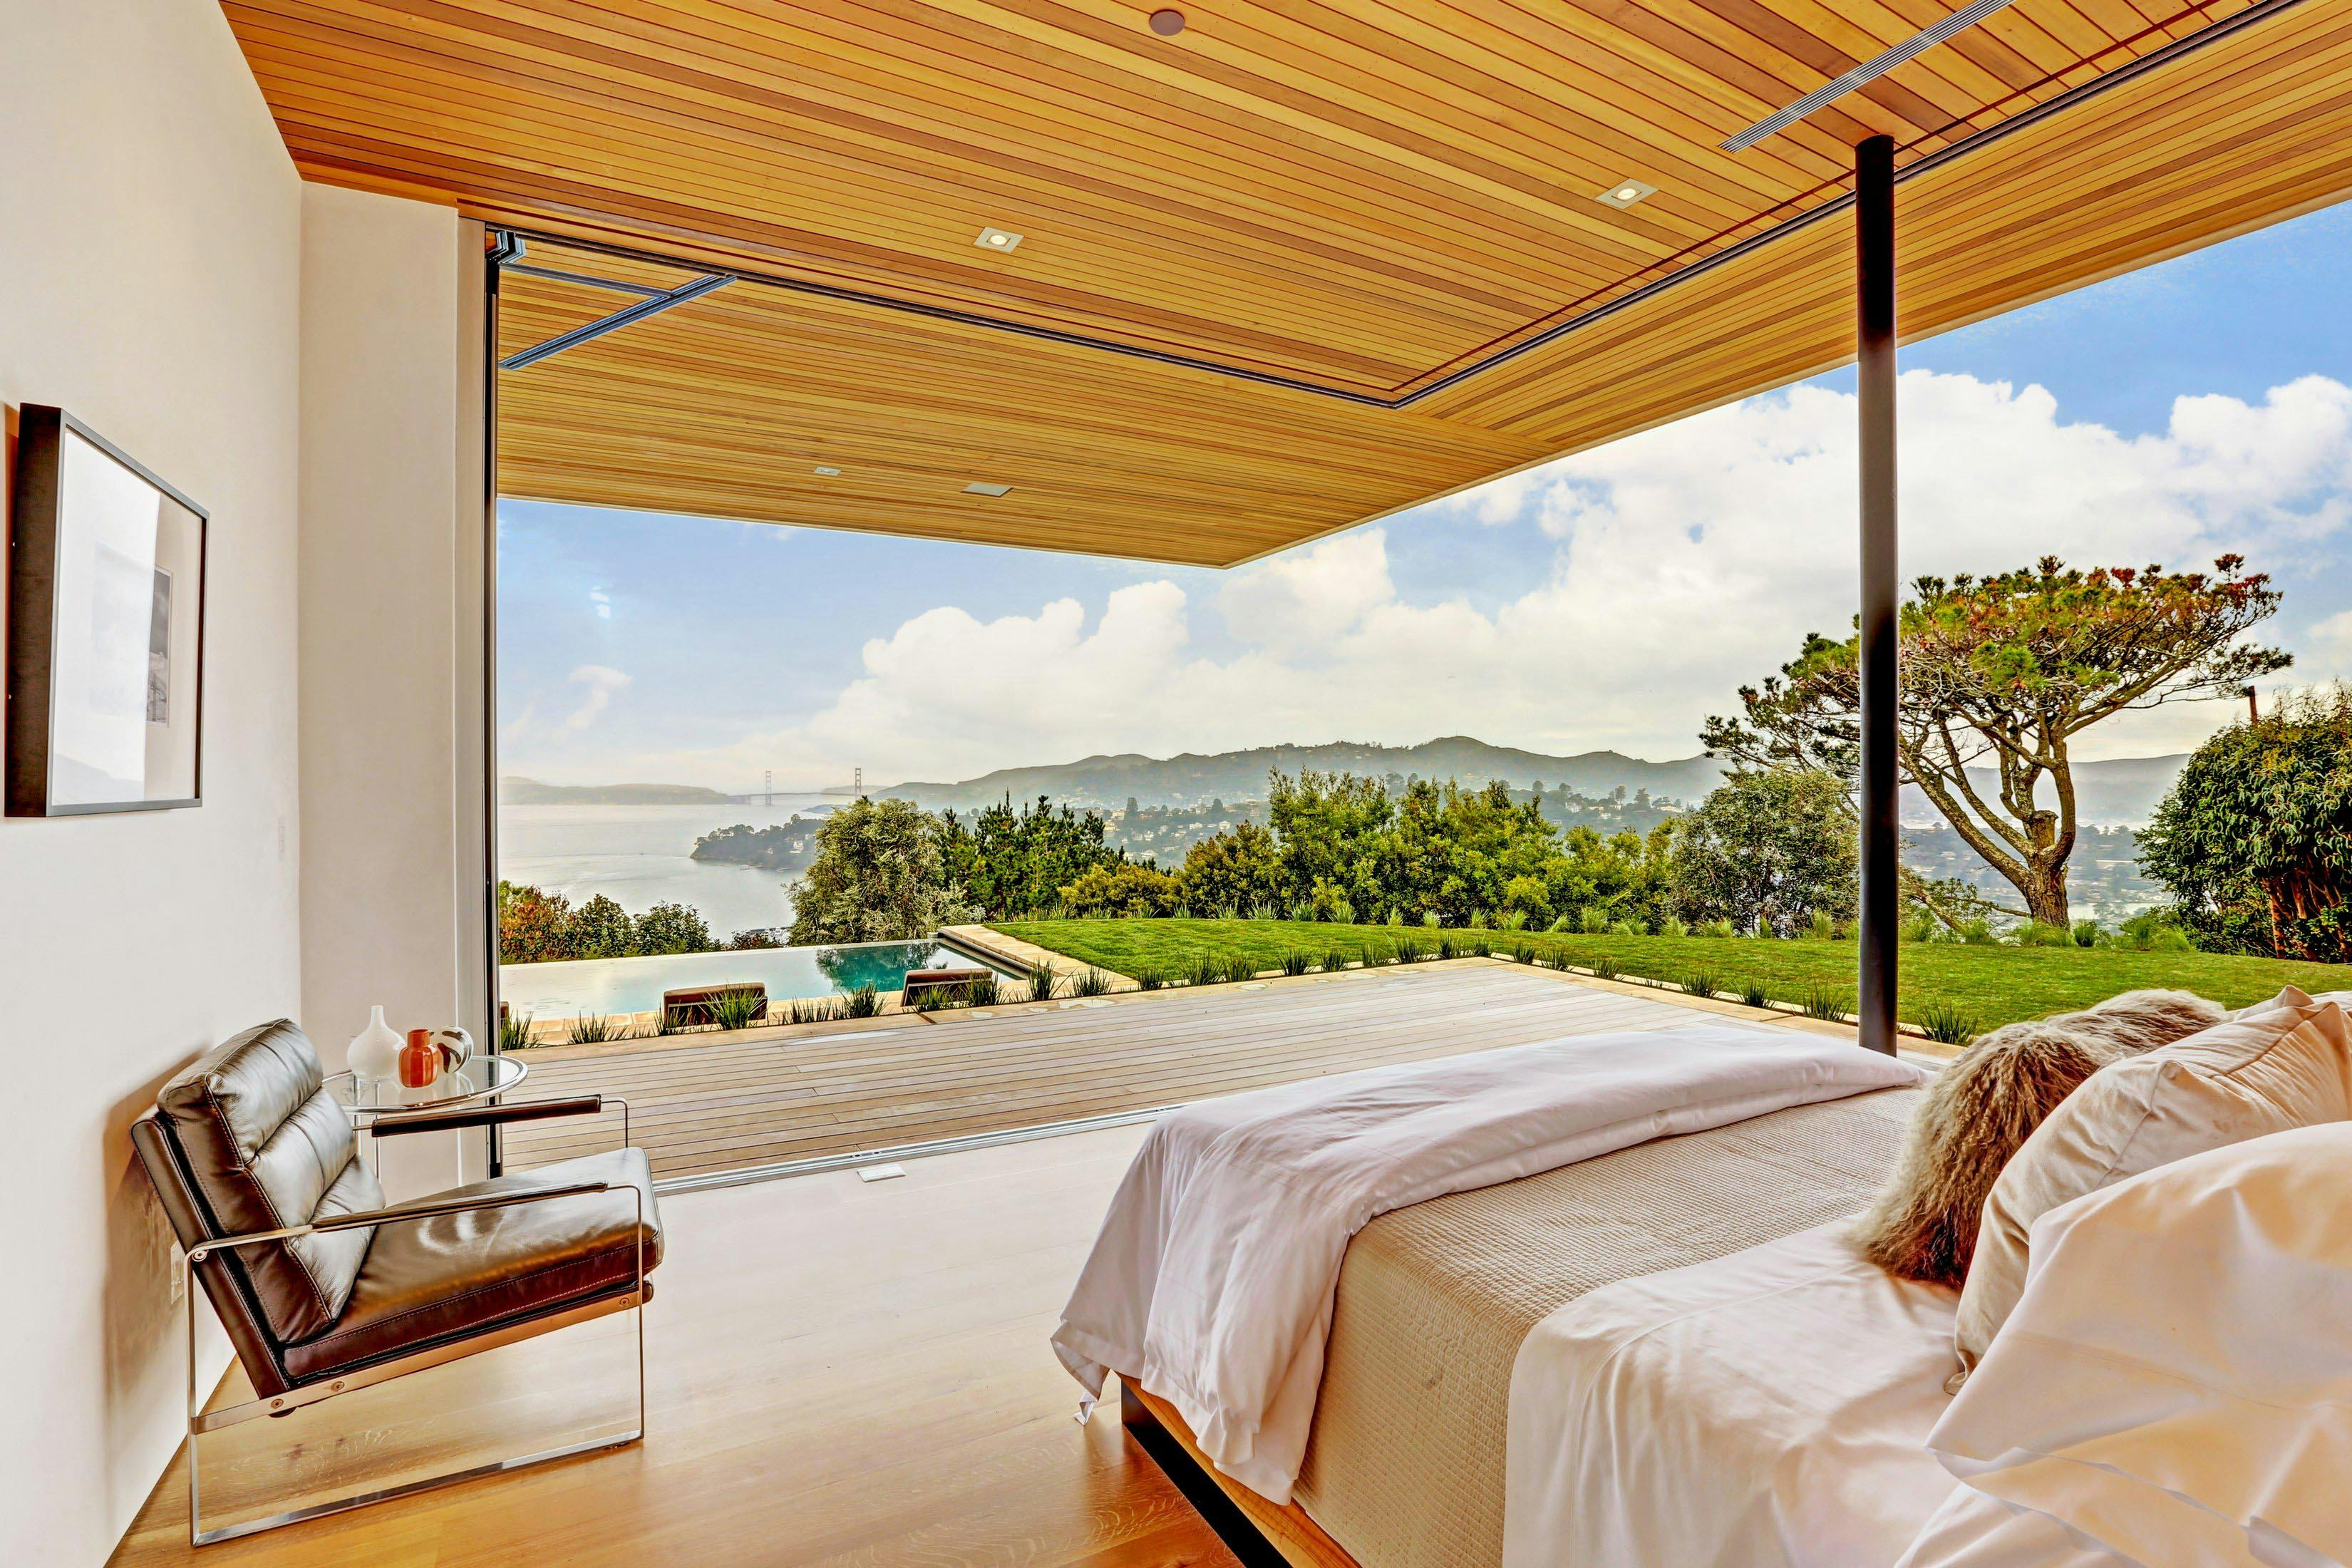 opening-glass-walls-in-bedroom-providing-ocean-view